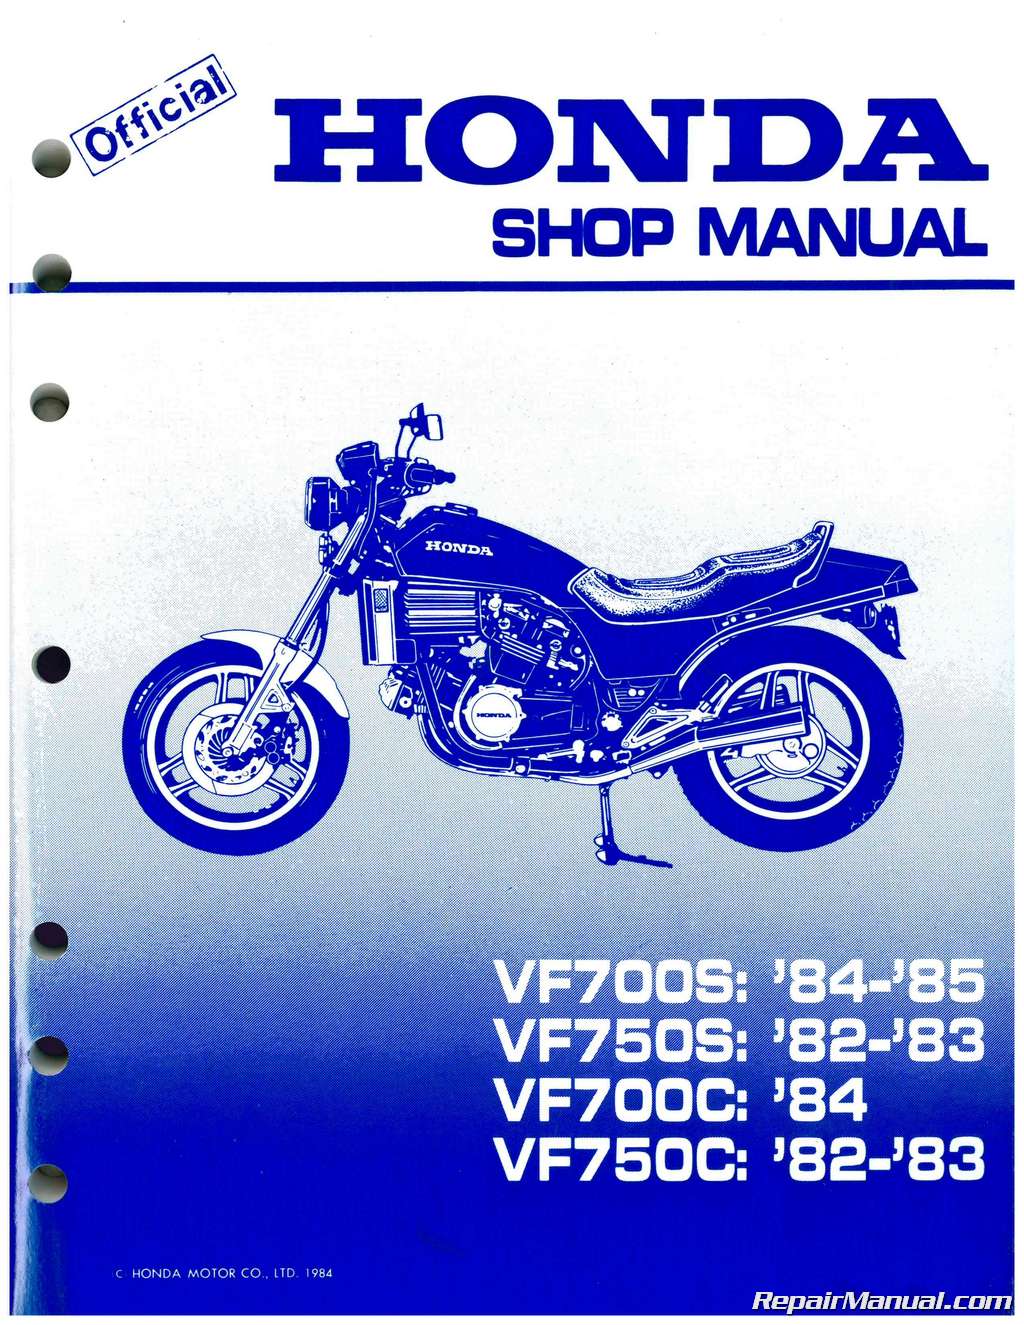 1984 Honda vf700c service manual #2